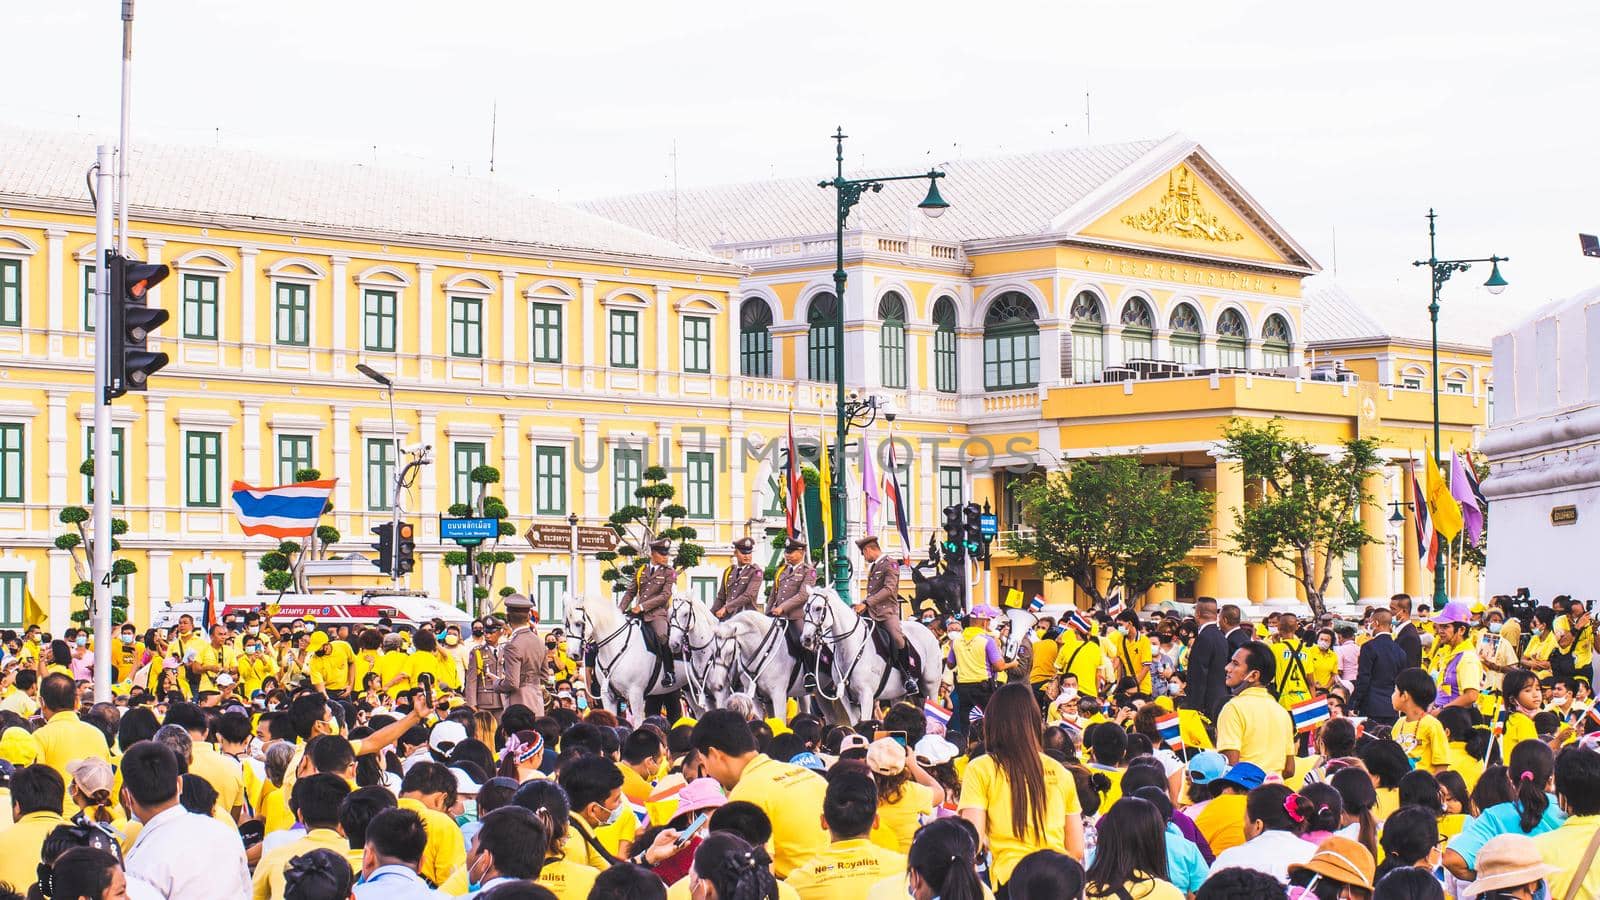 2020 November 01 Bangkok Thailand wearing yellow shirts rally in support of monarchy